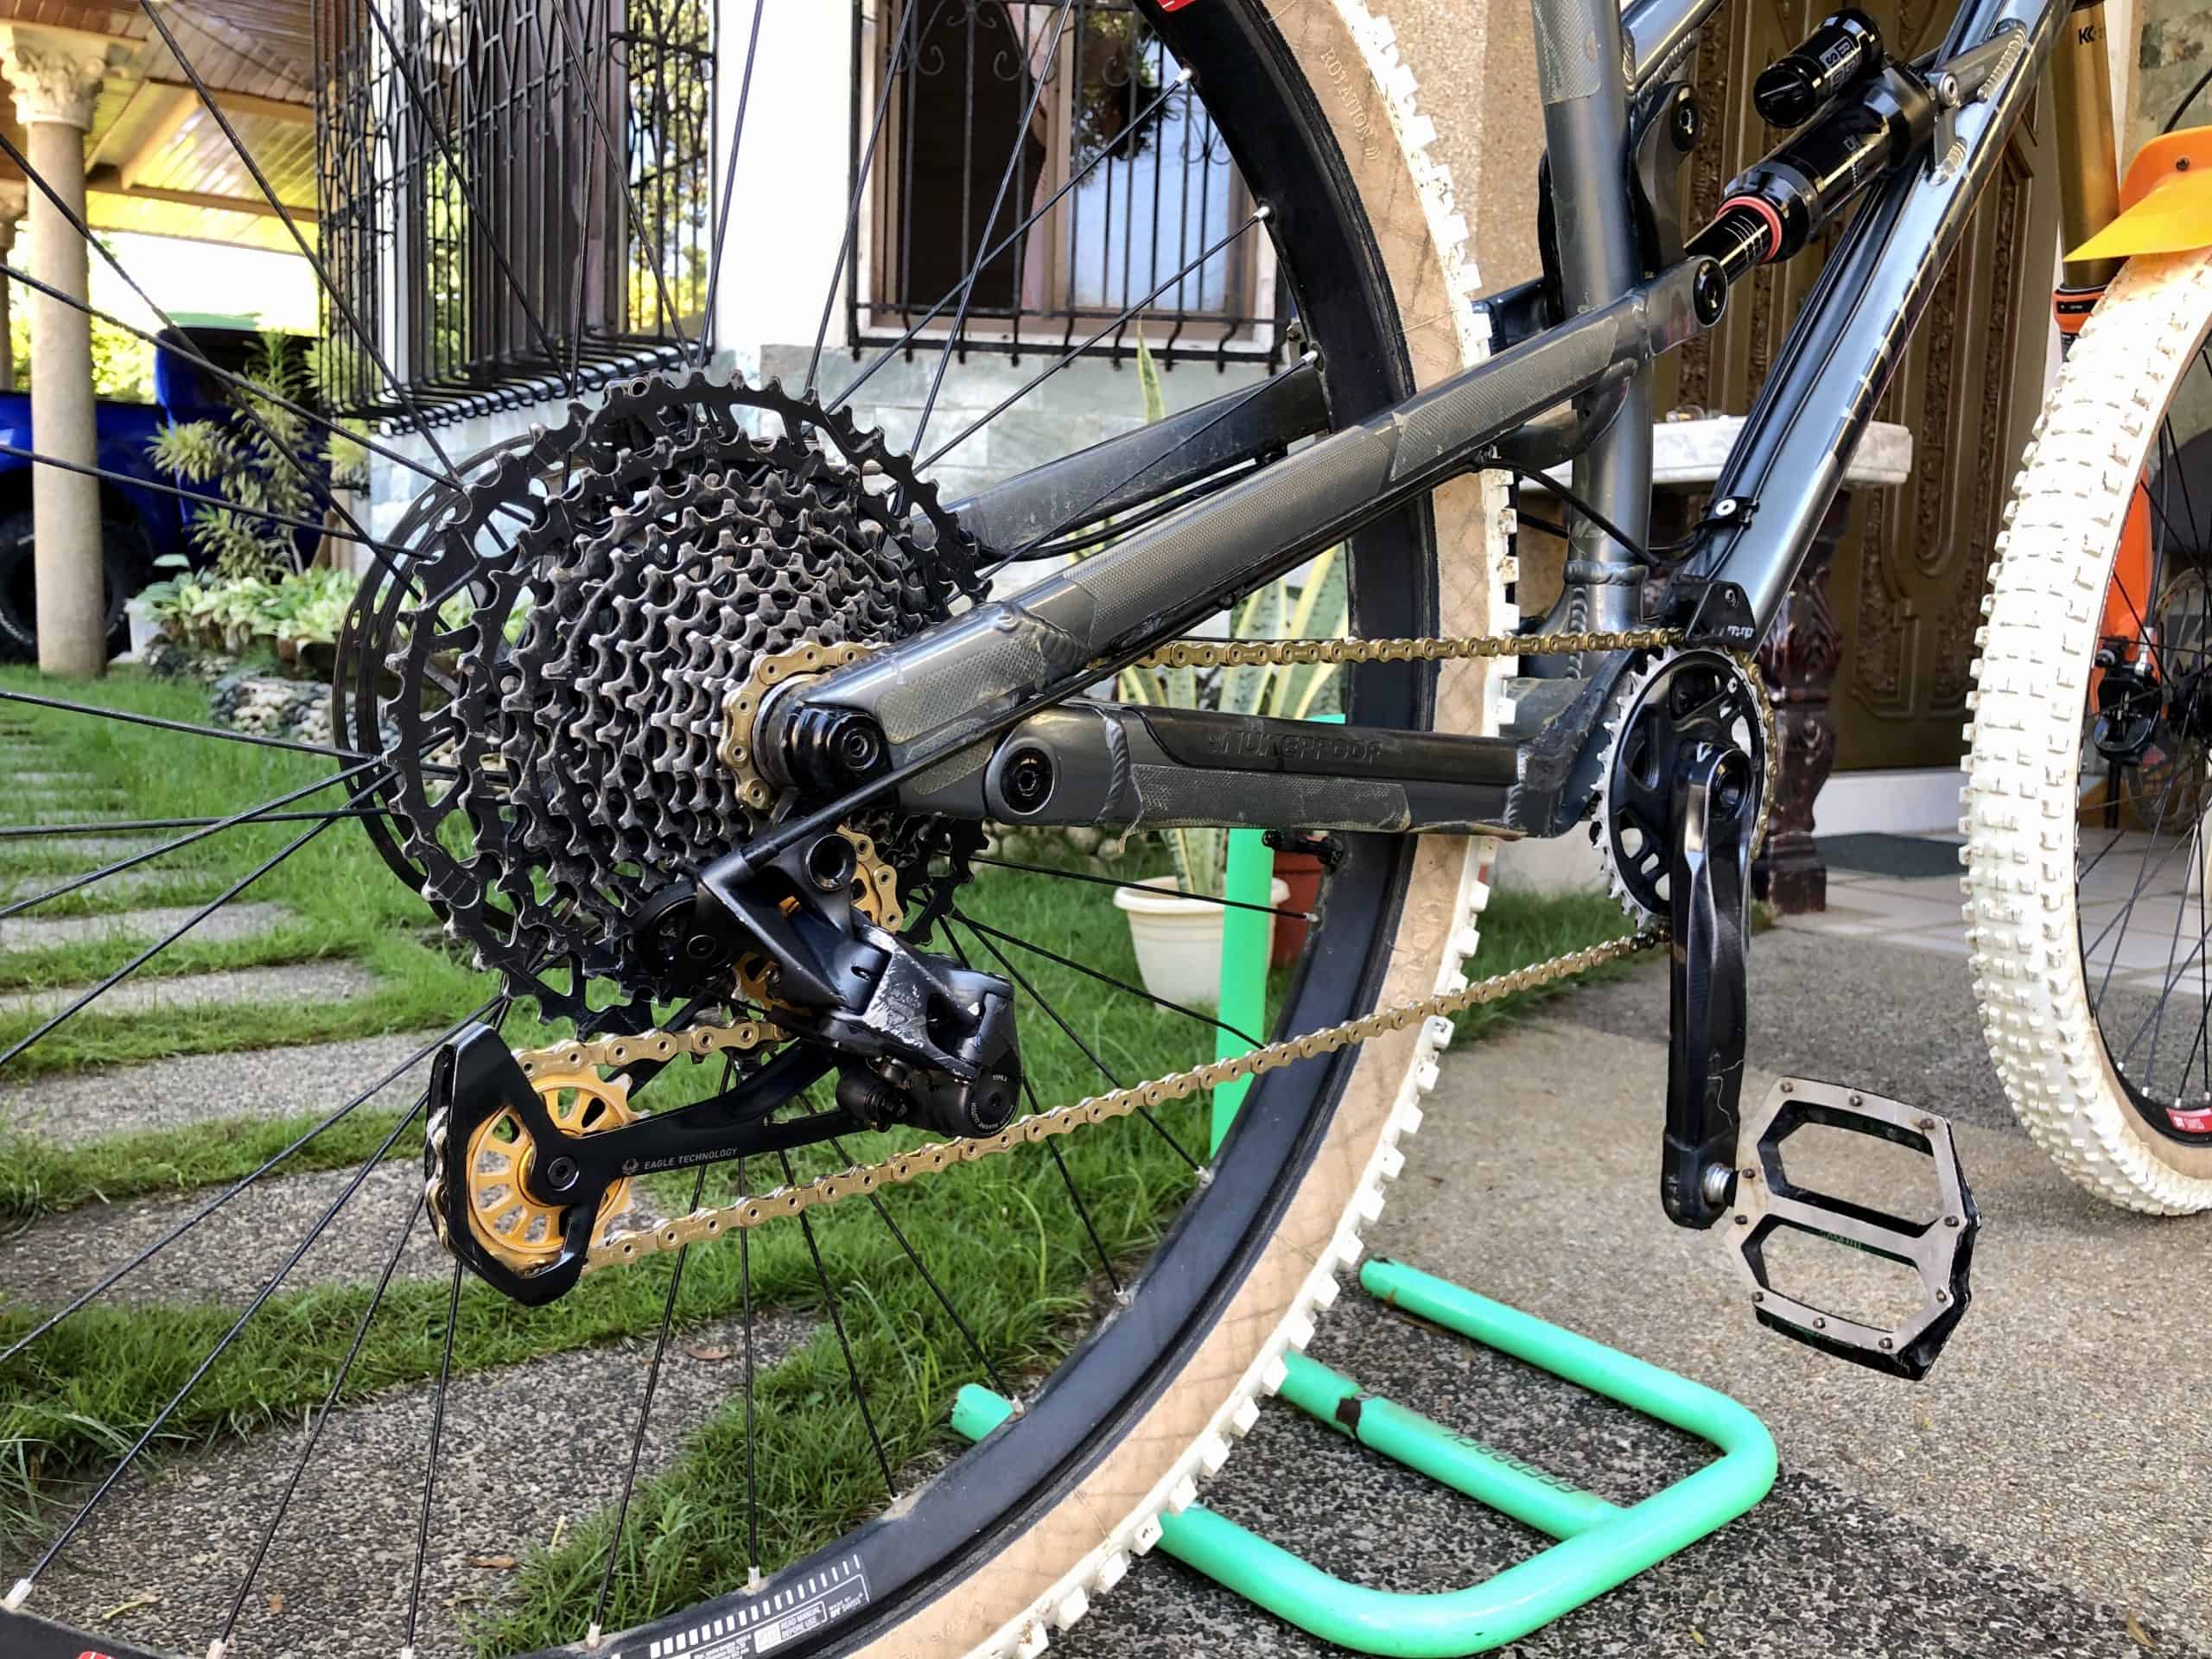 How to Fix Bike Gears That Won’t Shift